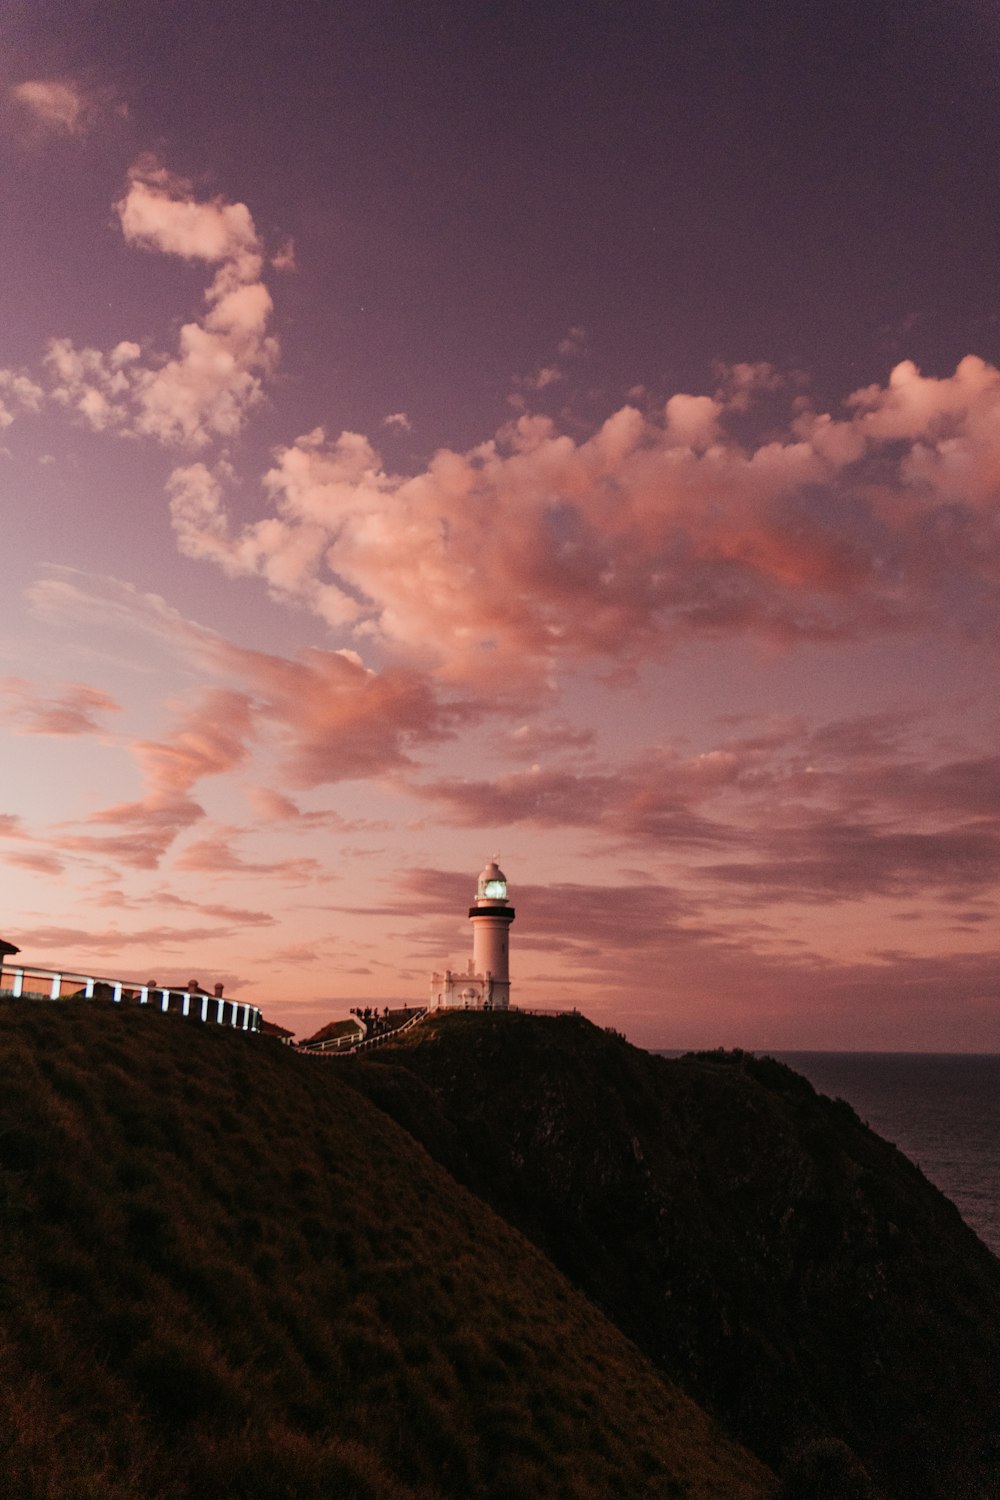 a lighthouse on top of a hill near the ocean